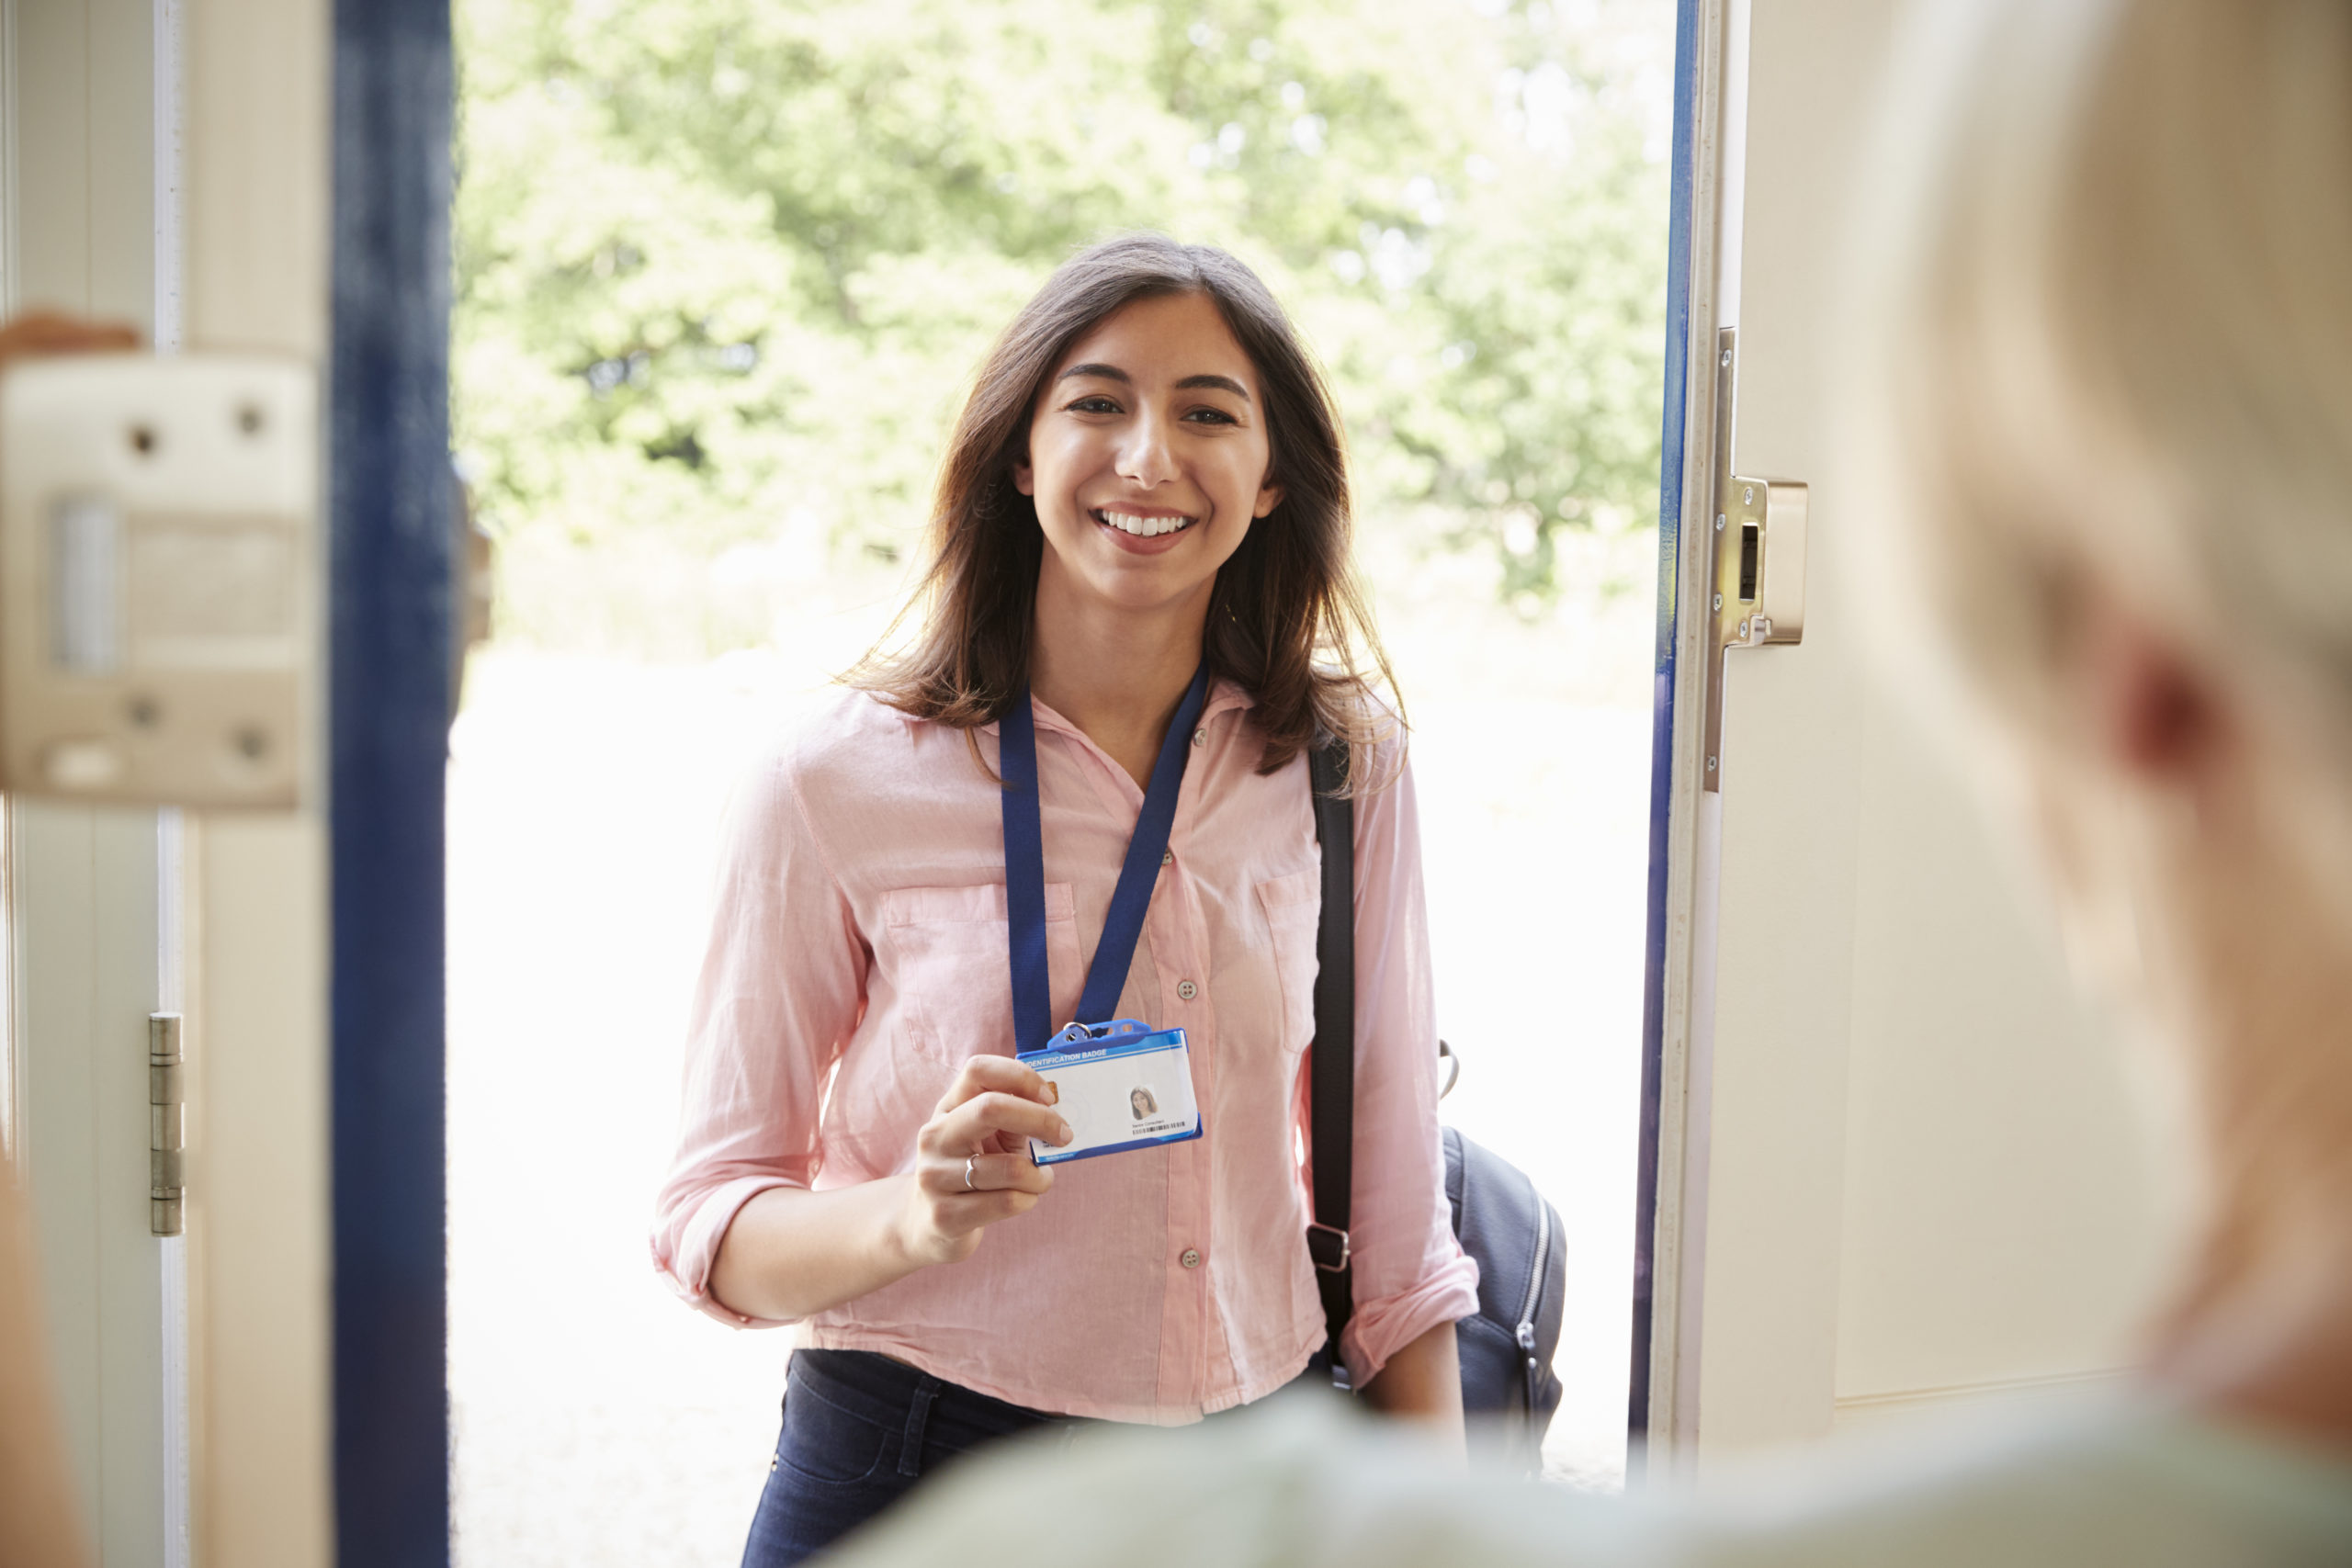 Social worker standing in doorway holding ID card